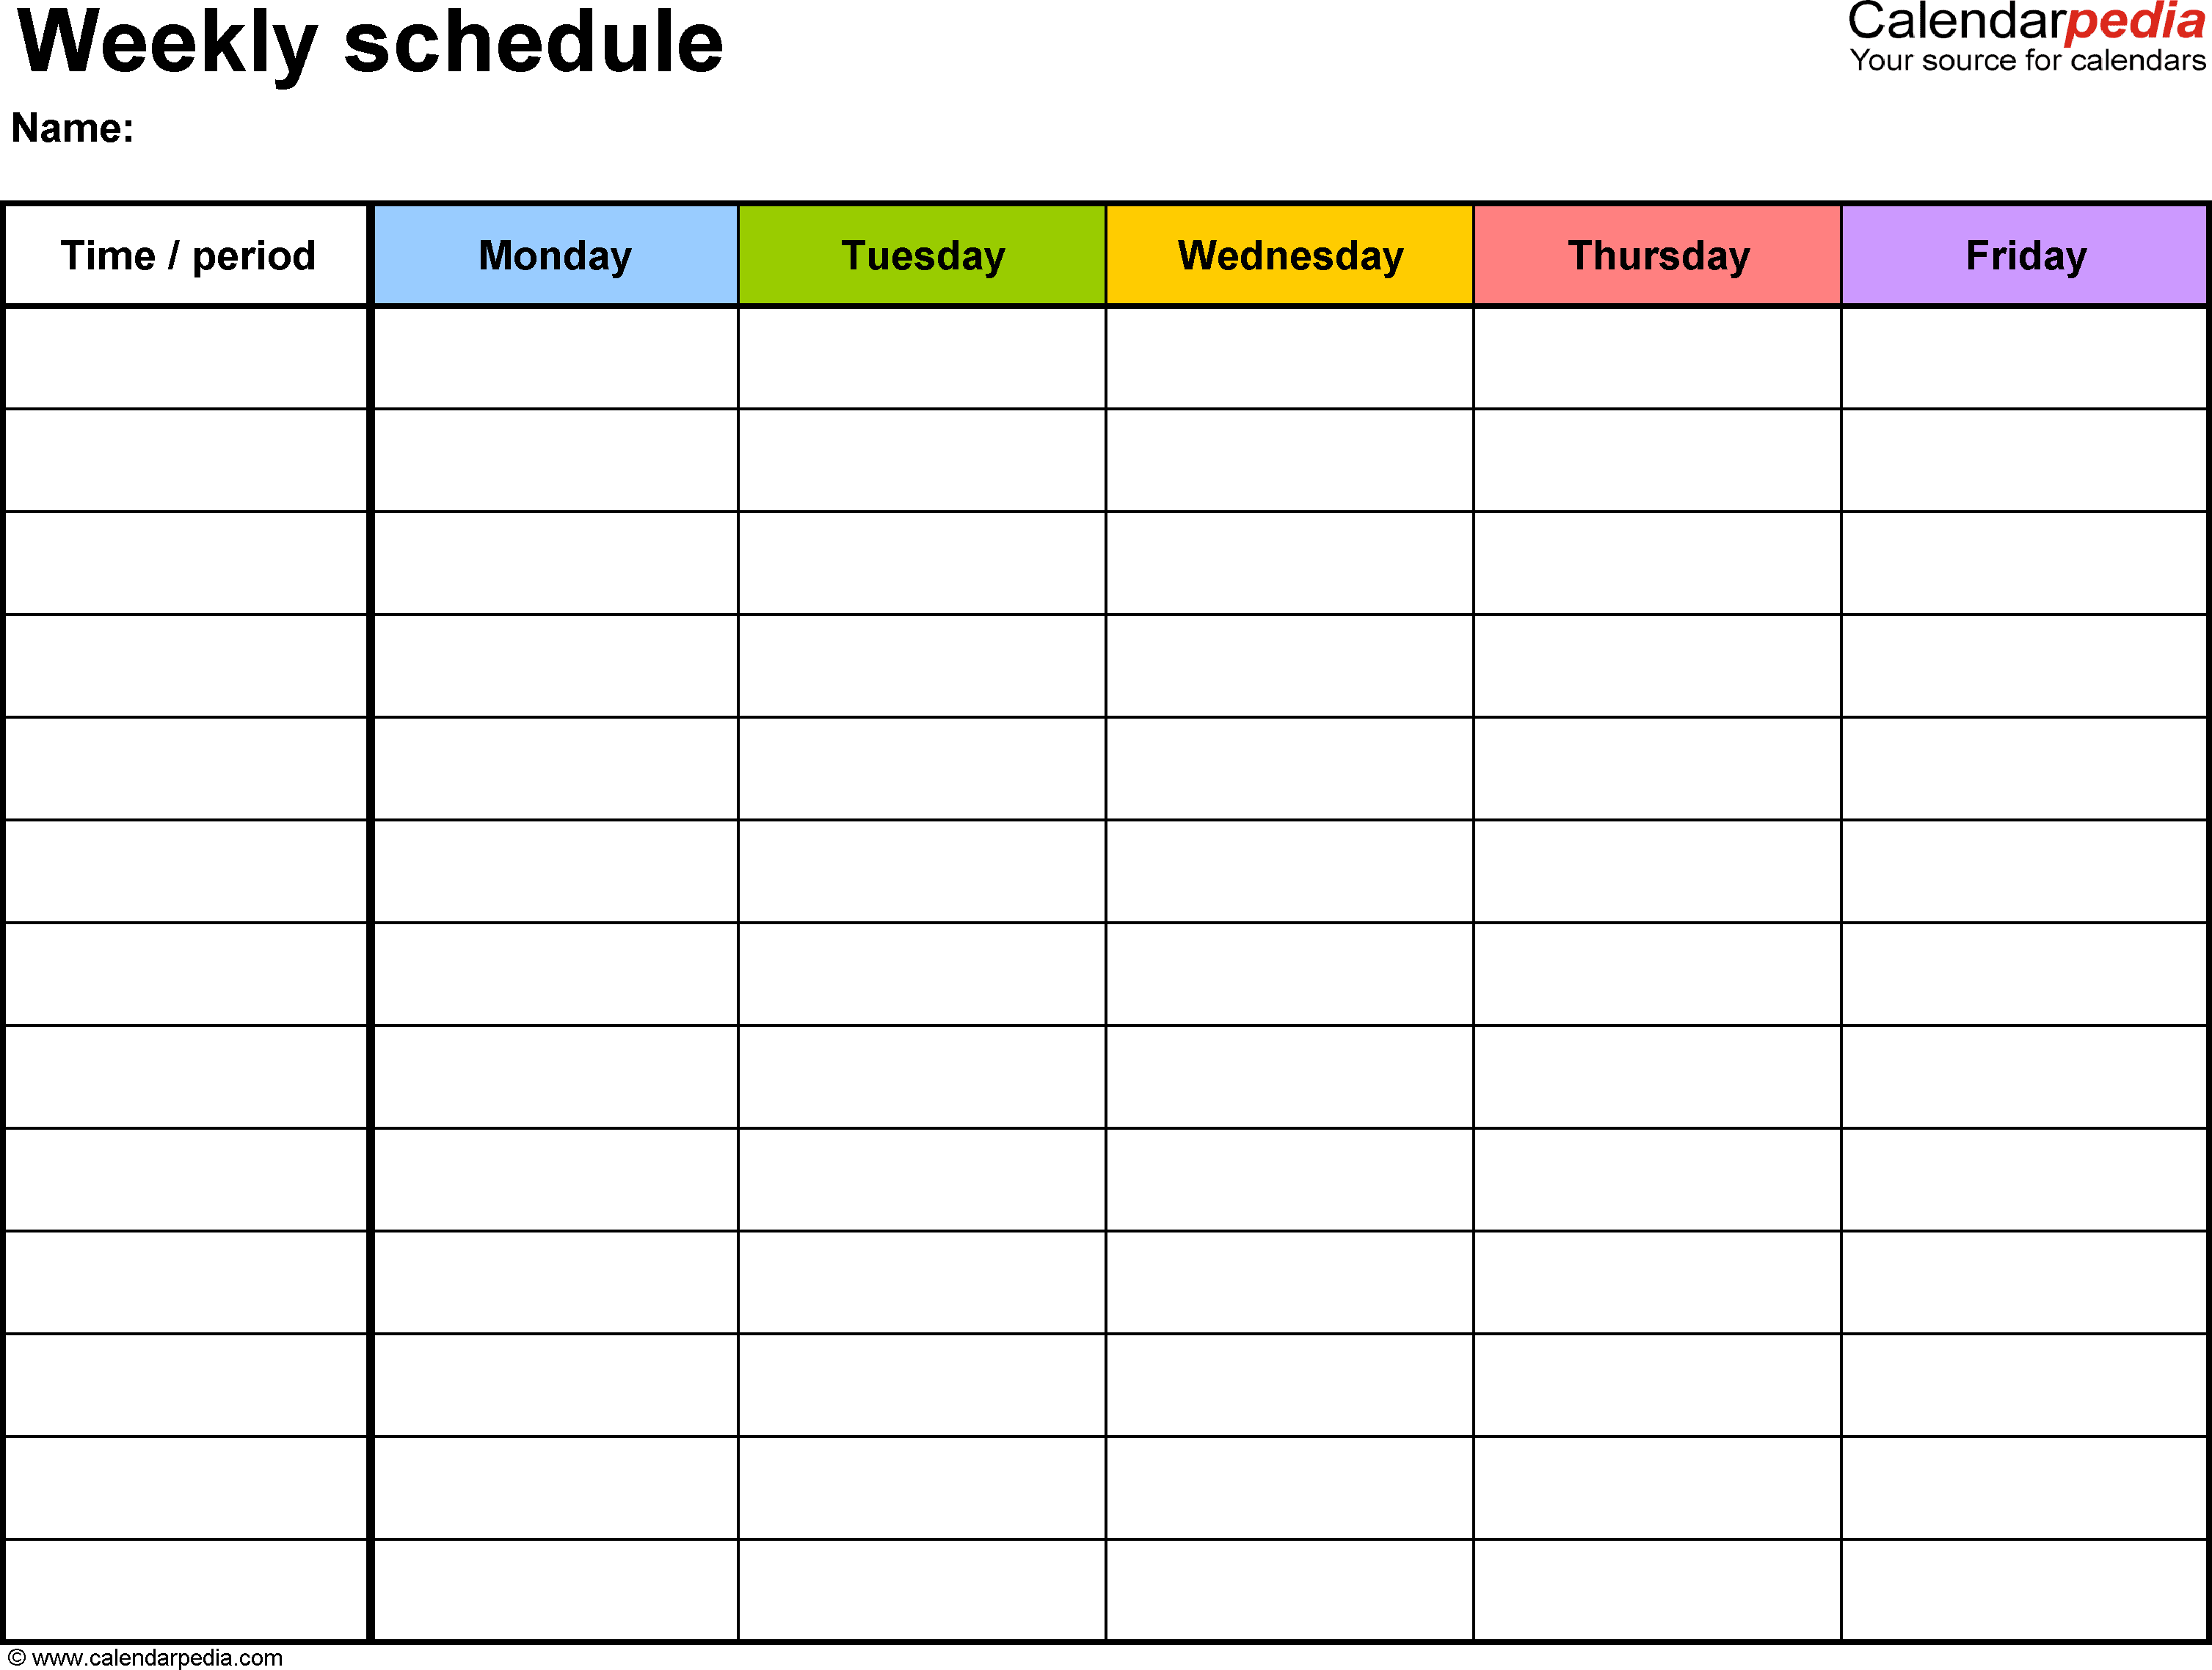 Schedules Office.com